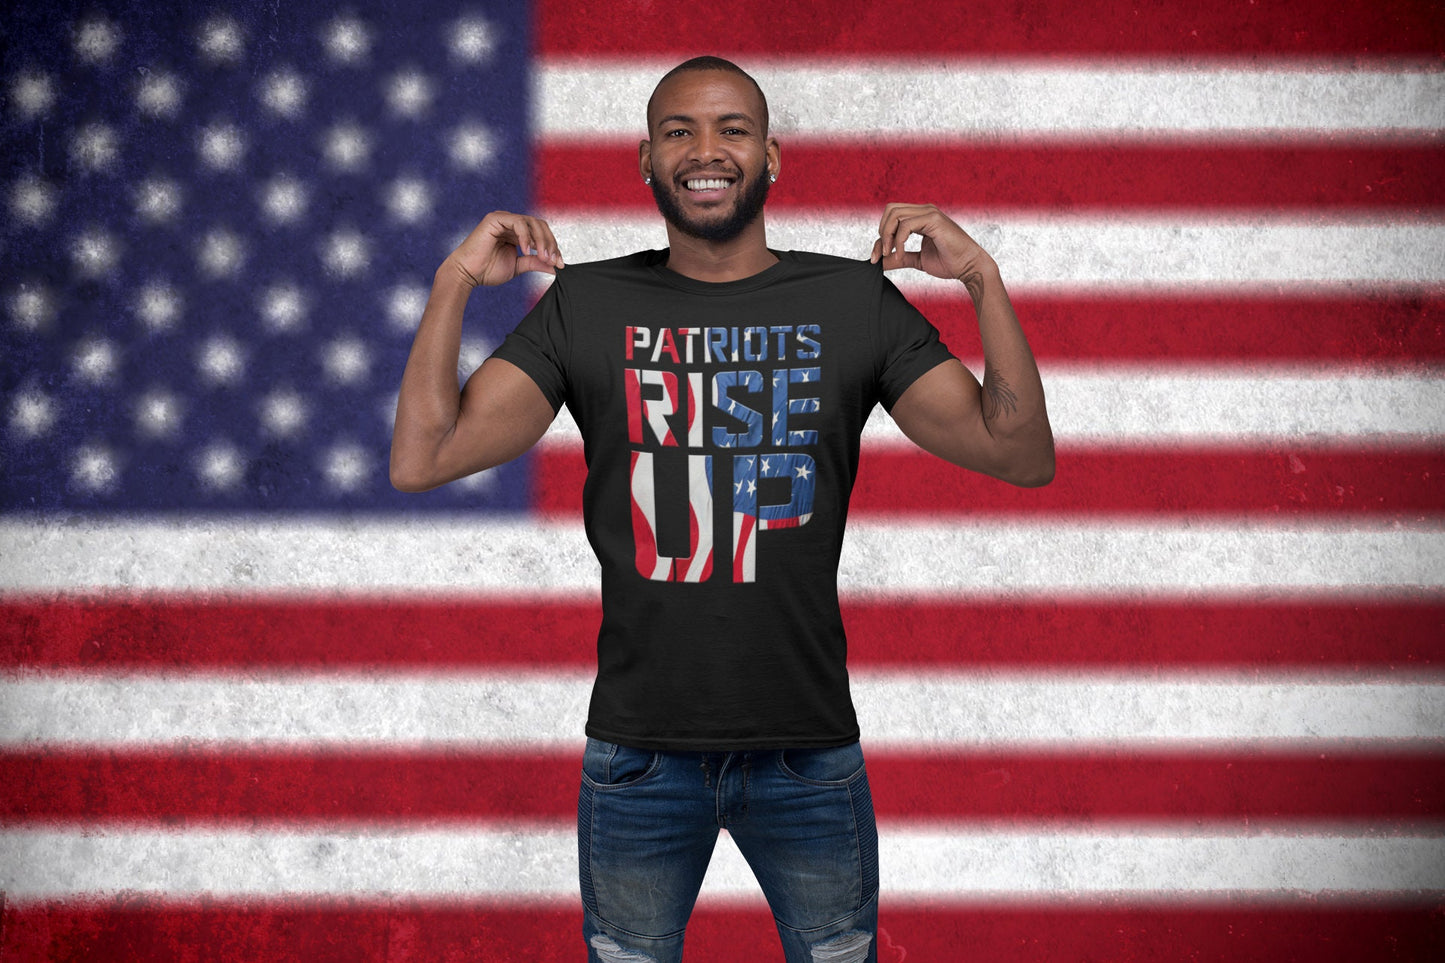 Patriots Rise Up - American Flag Patriotic DTG Printed Graphic T Shirt